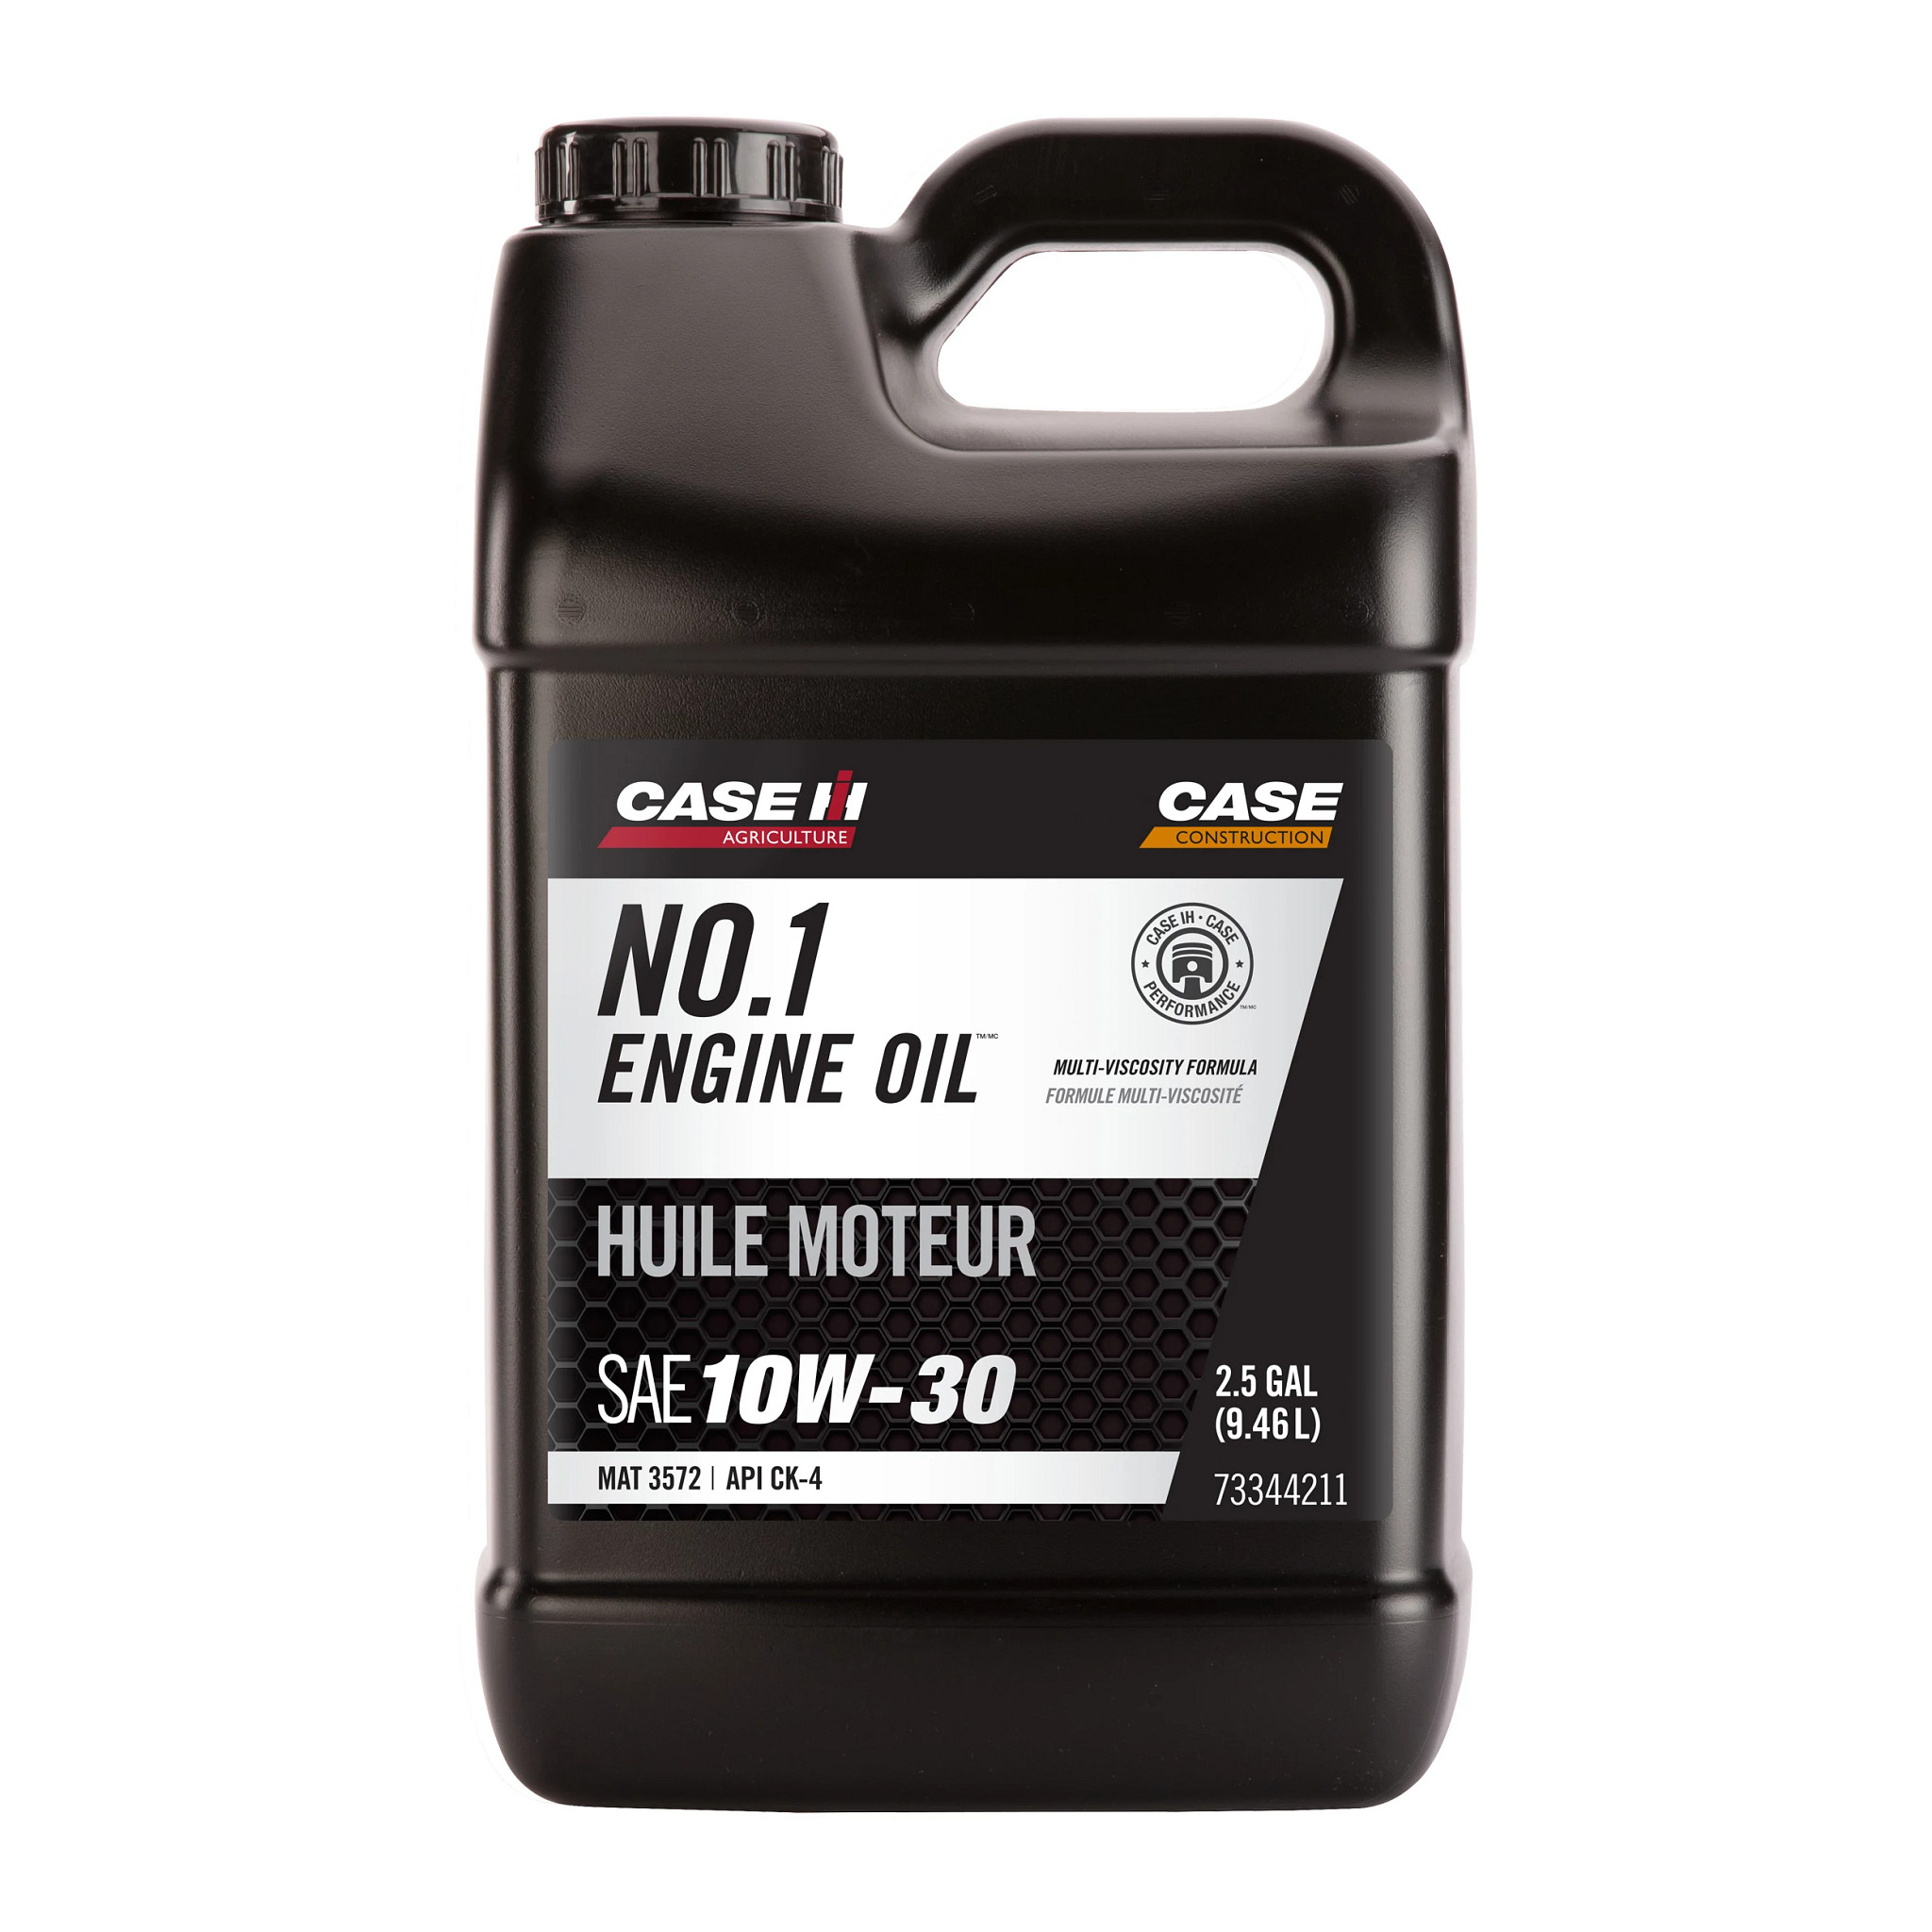 Case IH | No.1 Engine Oil™ - SAE 10W-30 - API CK-4 - MAT 3572 - 1